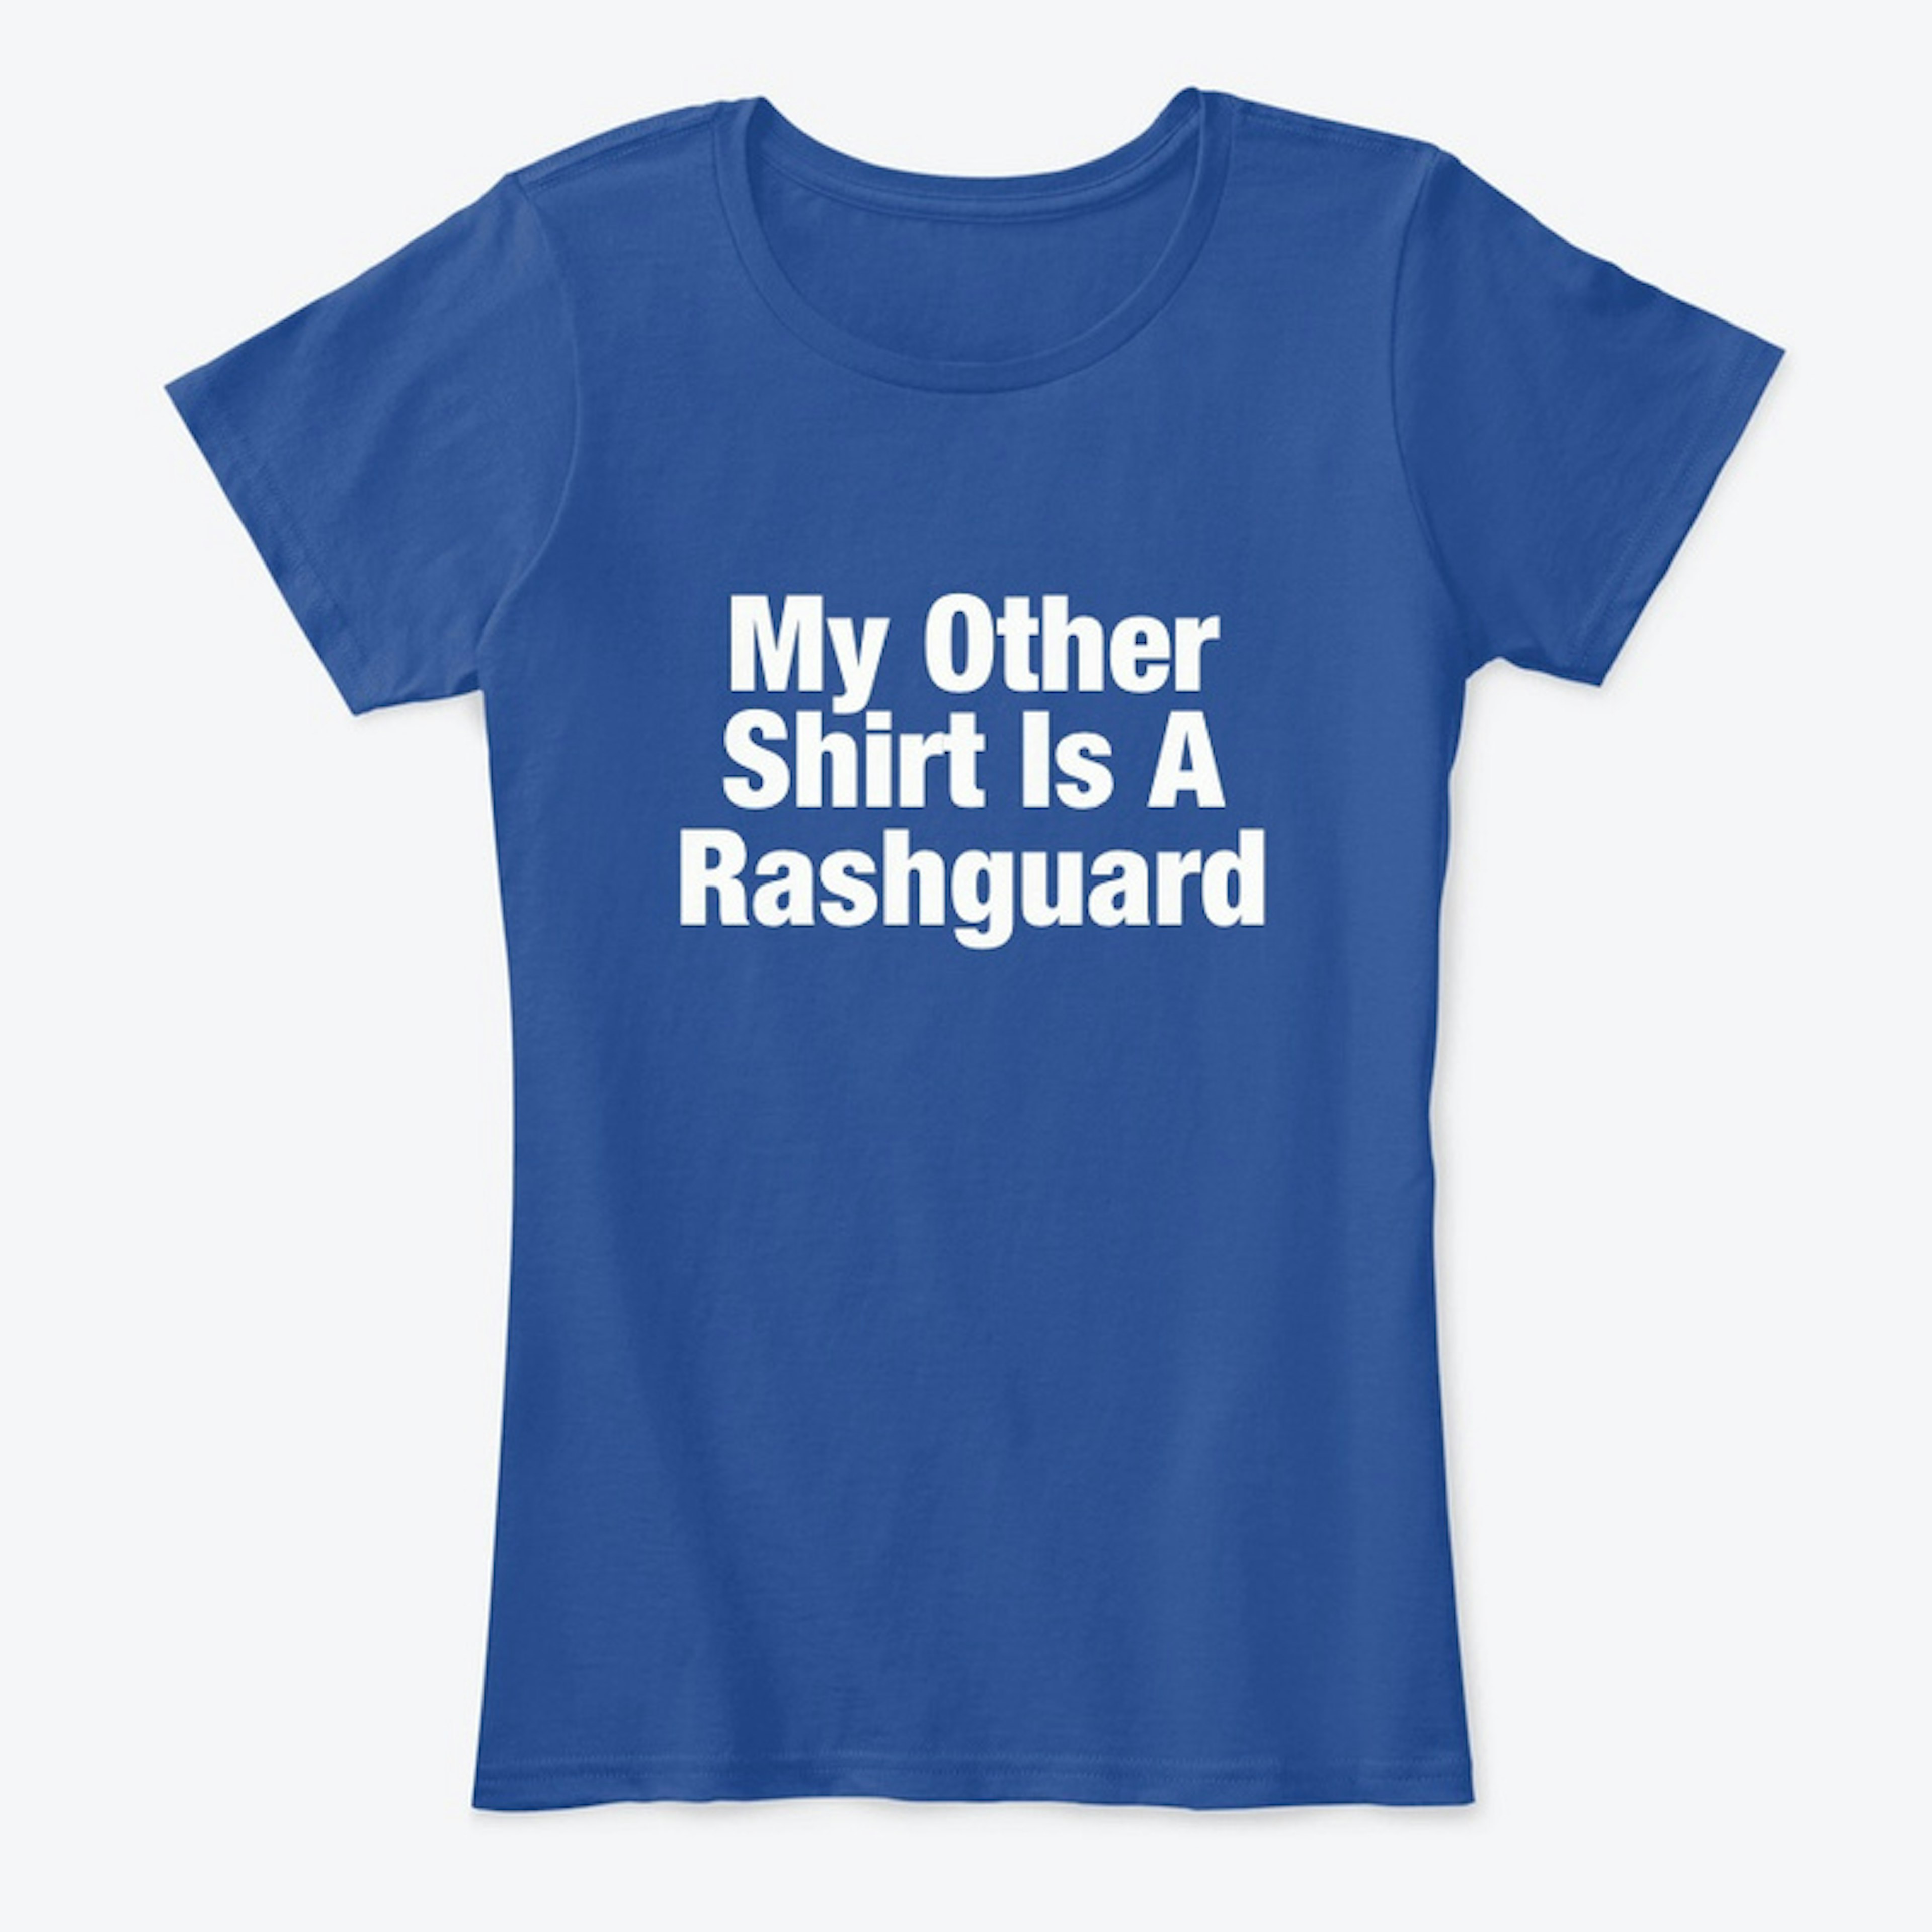 Not a Rashguard